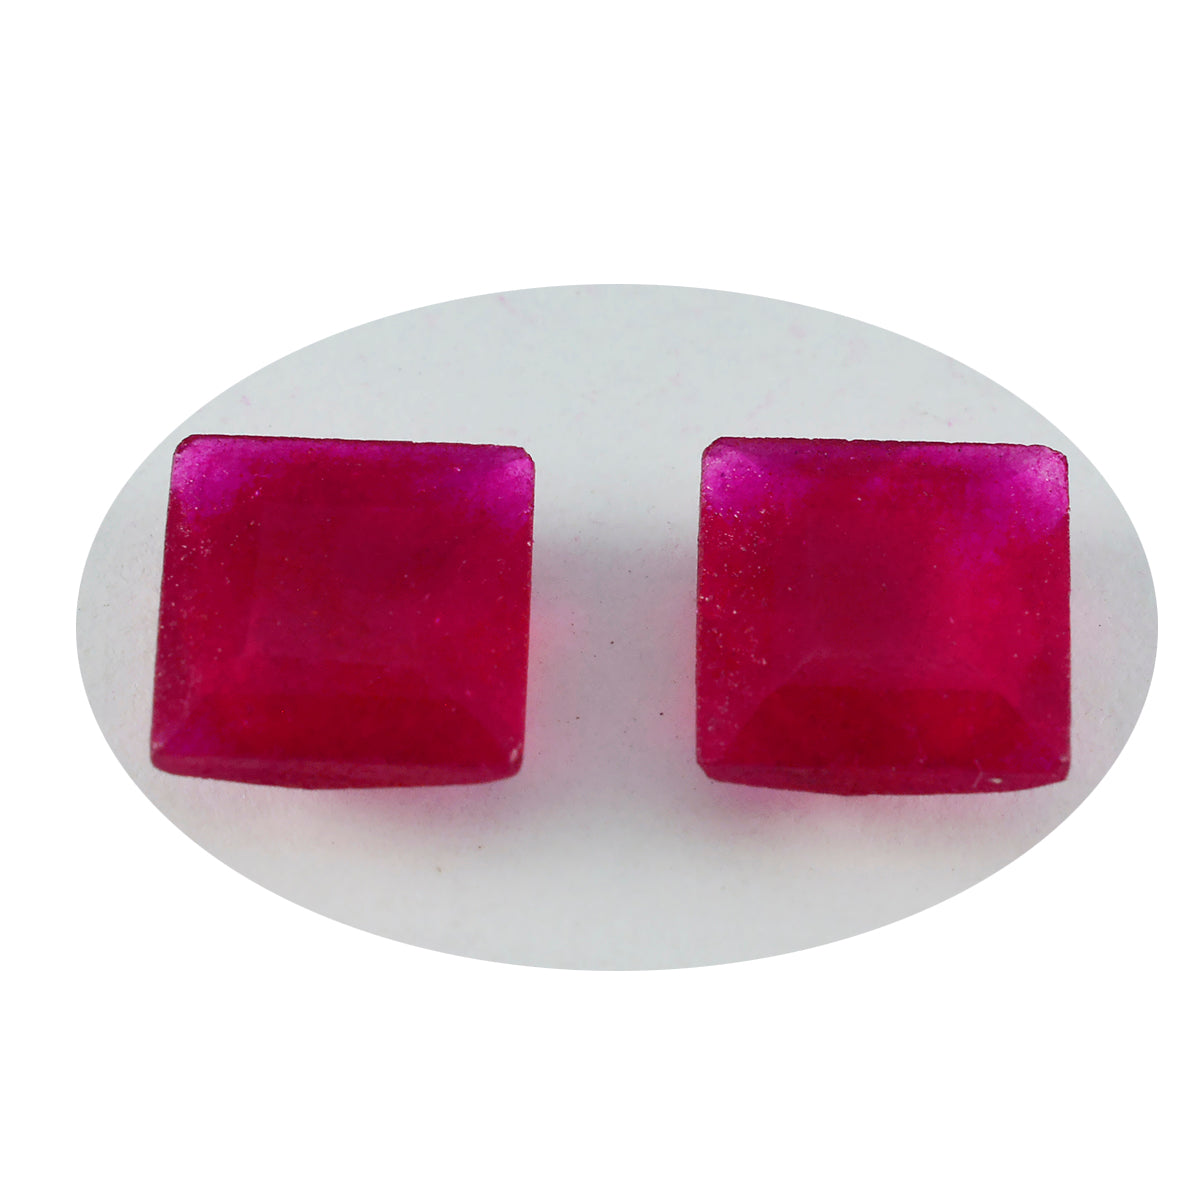 riyogems 1 шт. настоящая красная яшма ограненная 13x13 мм квадратная форма красивый качественный драгоценный камень